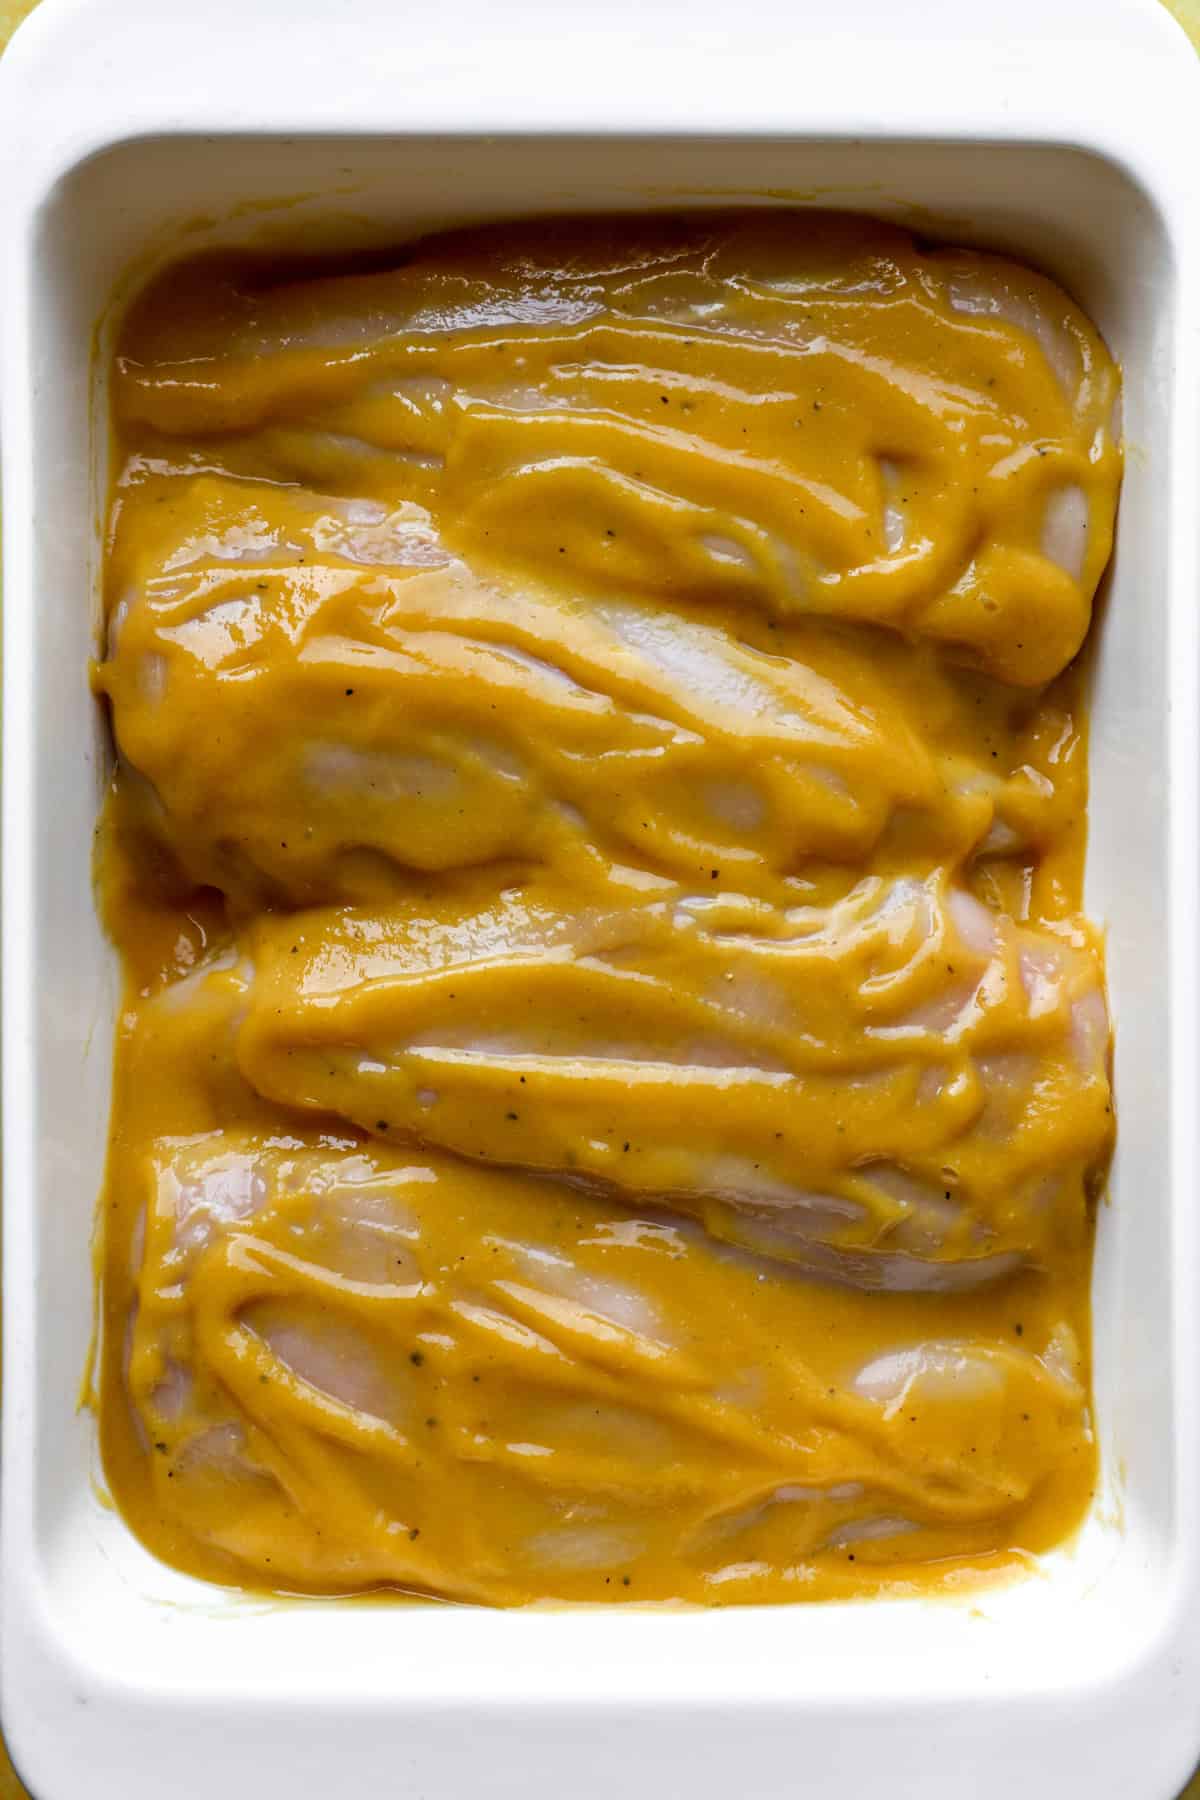 Raw chicken breasts marinating in pureed mango salsa. 